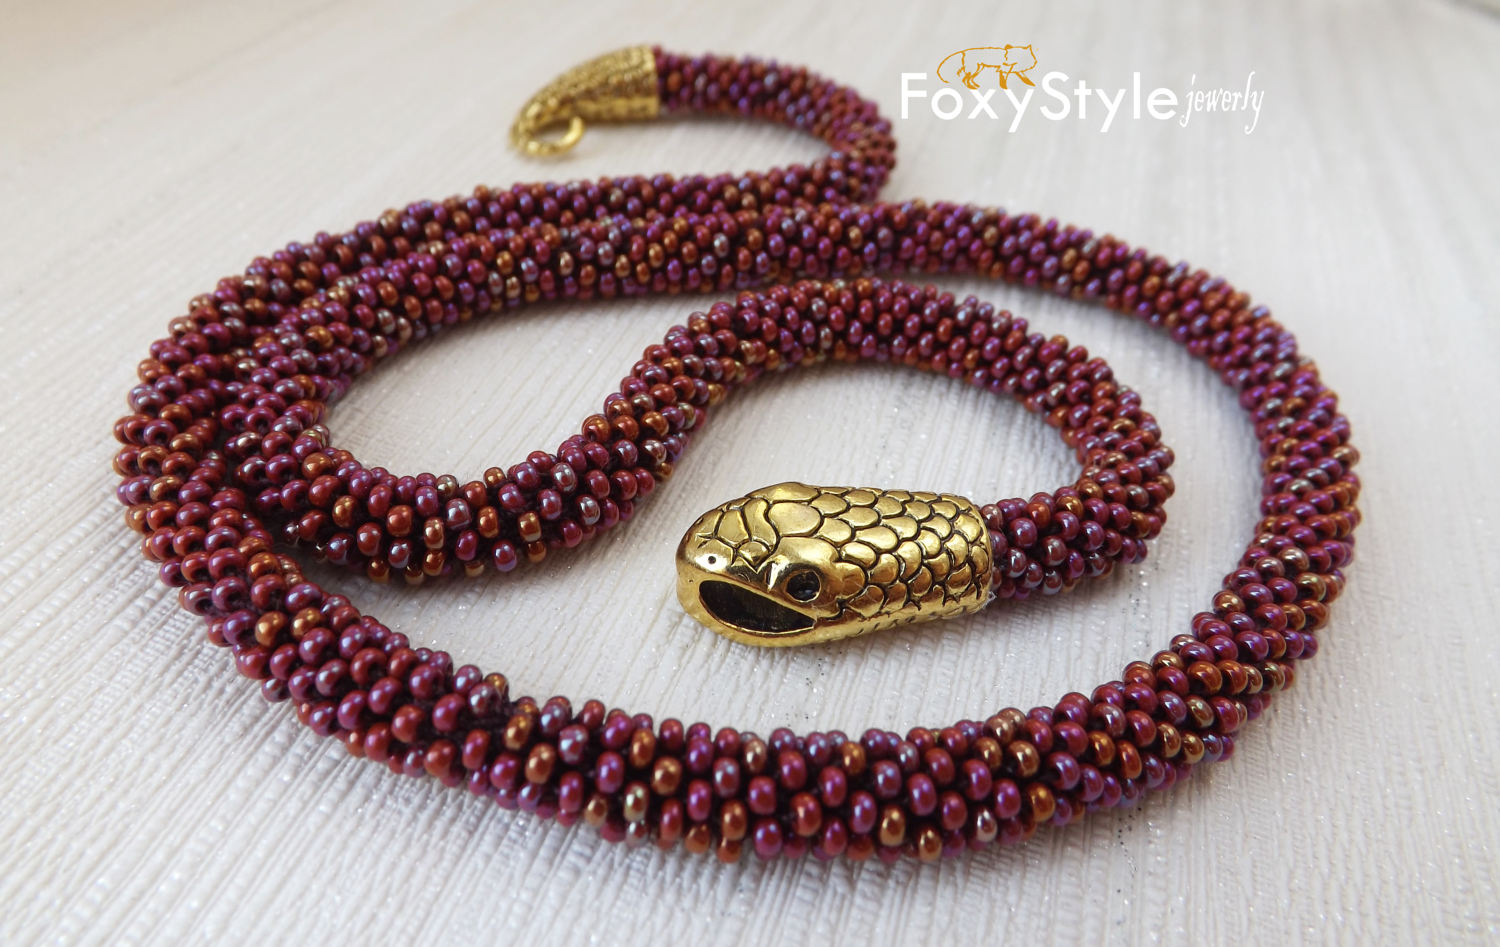 foxy style jewelry snake necklace